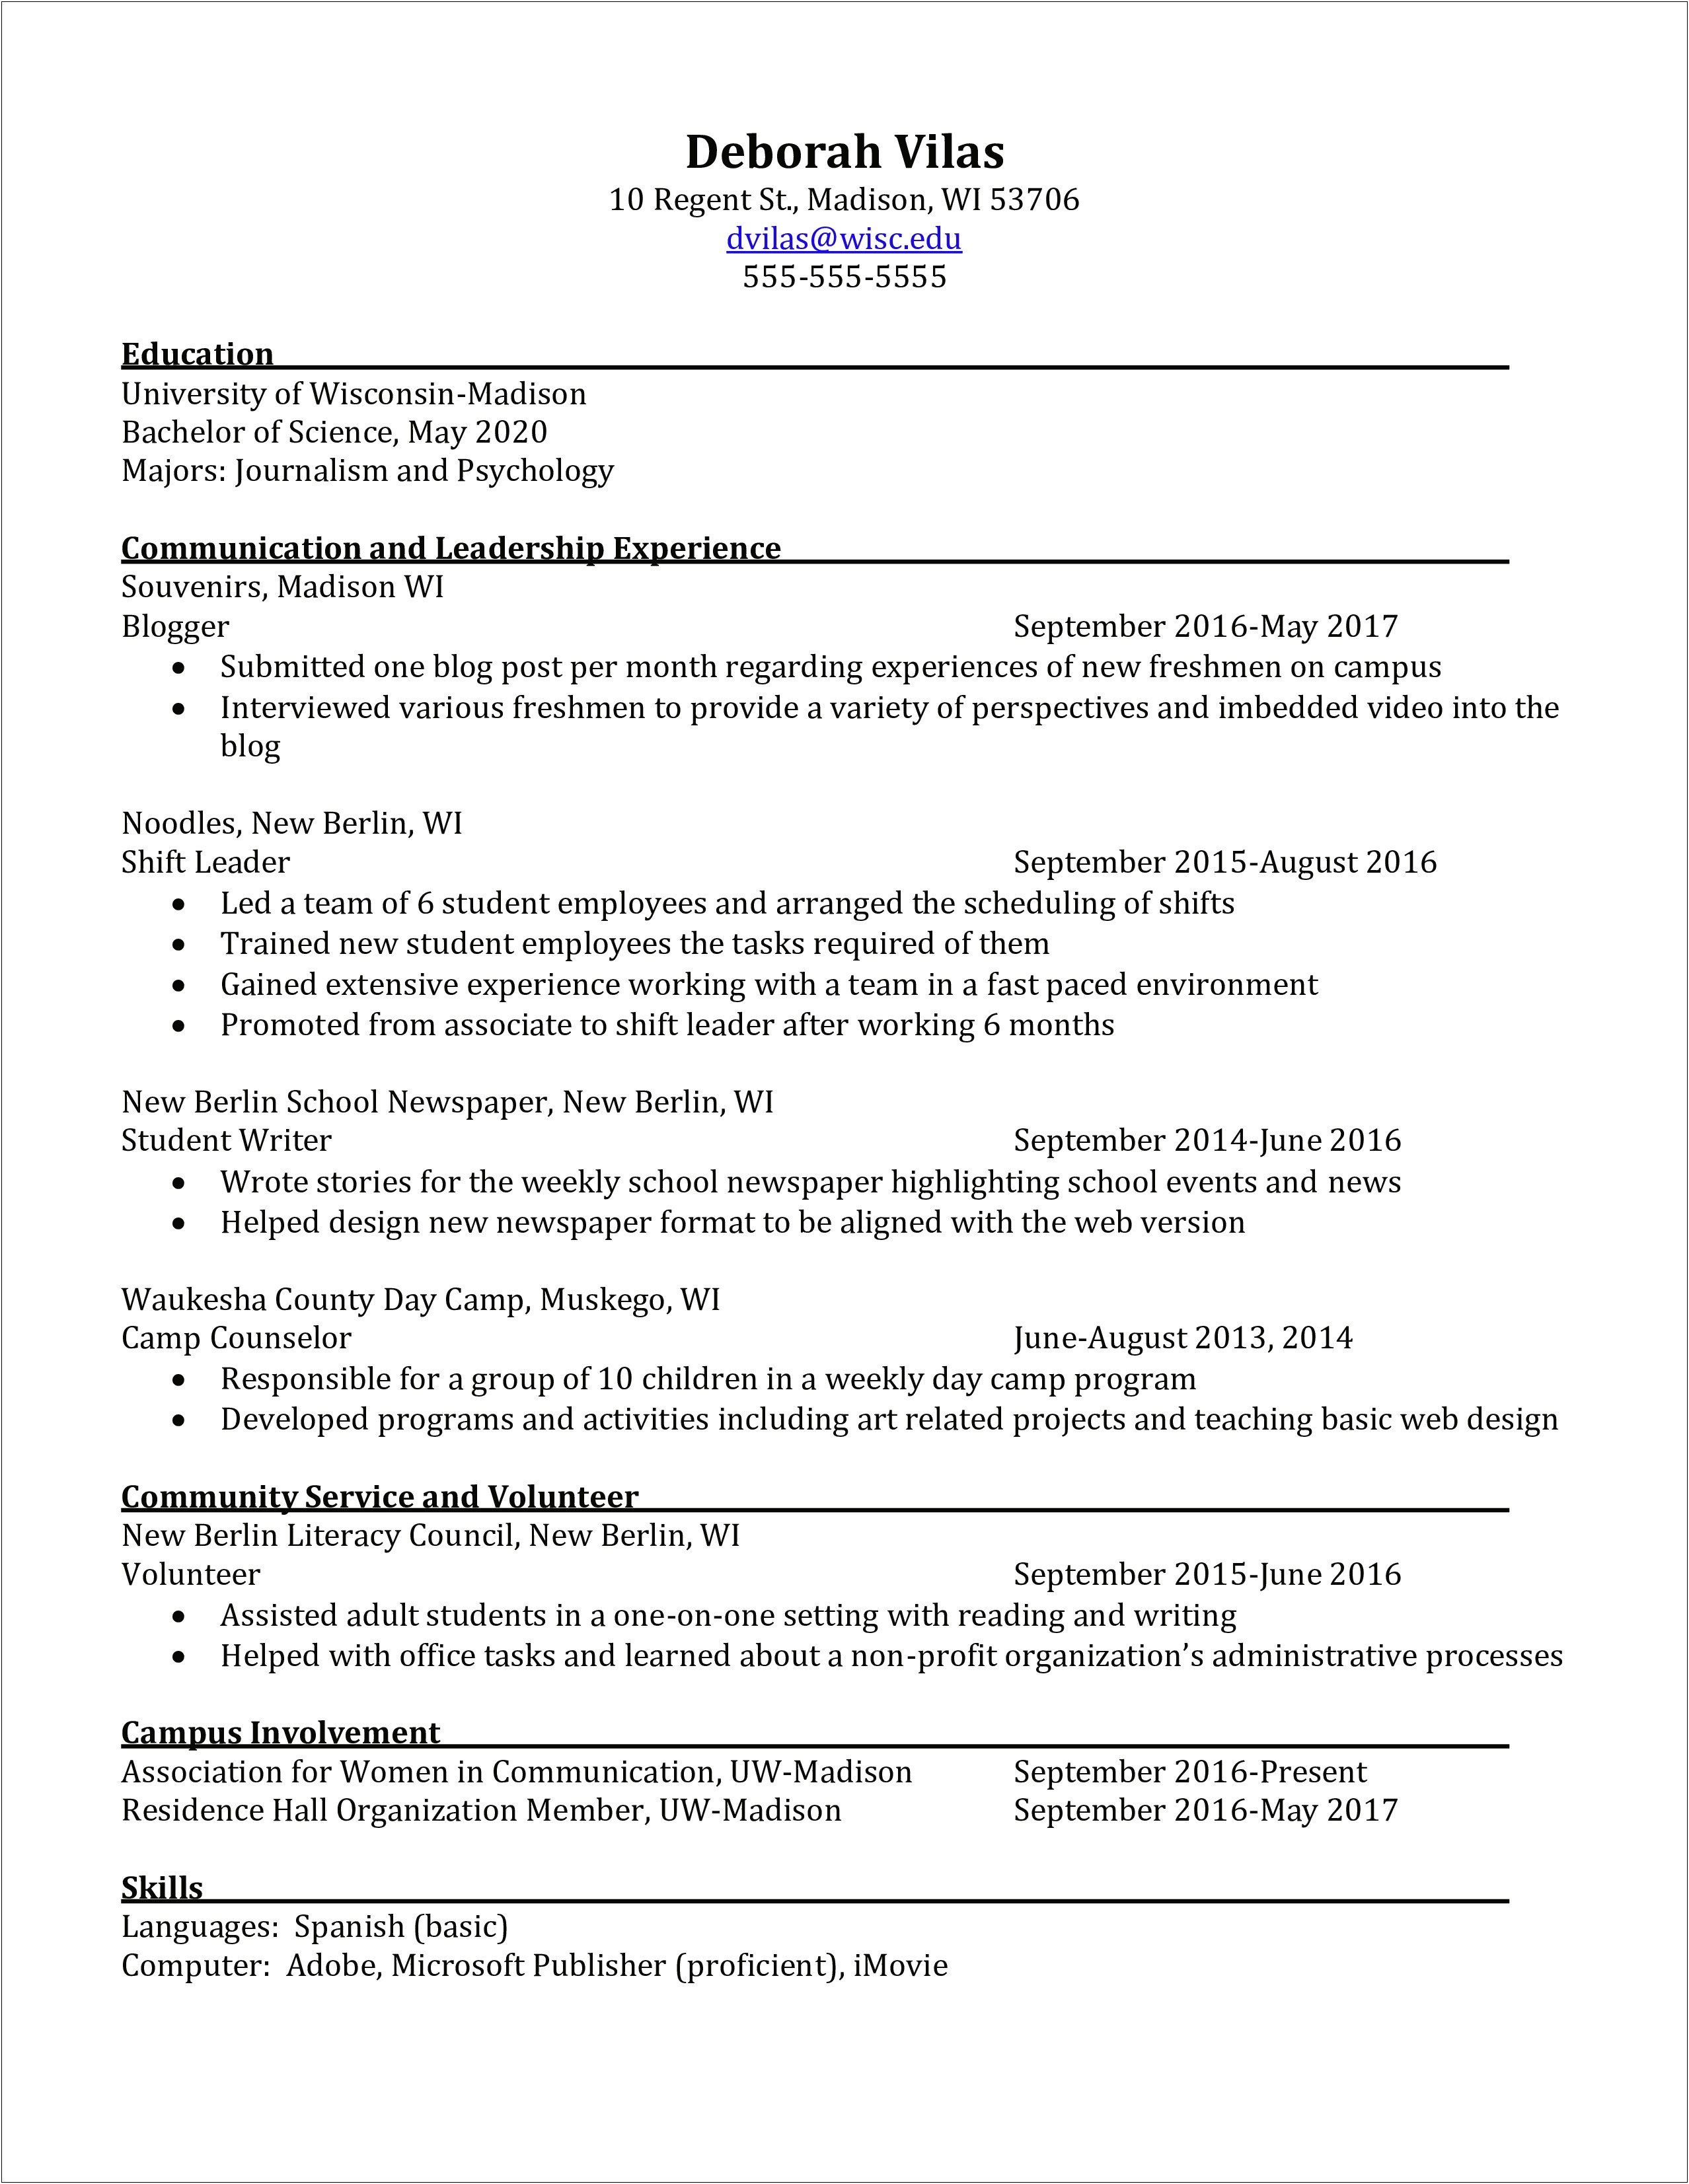 Uw Madison Business School Application Resume